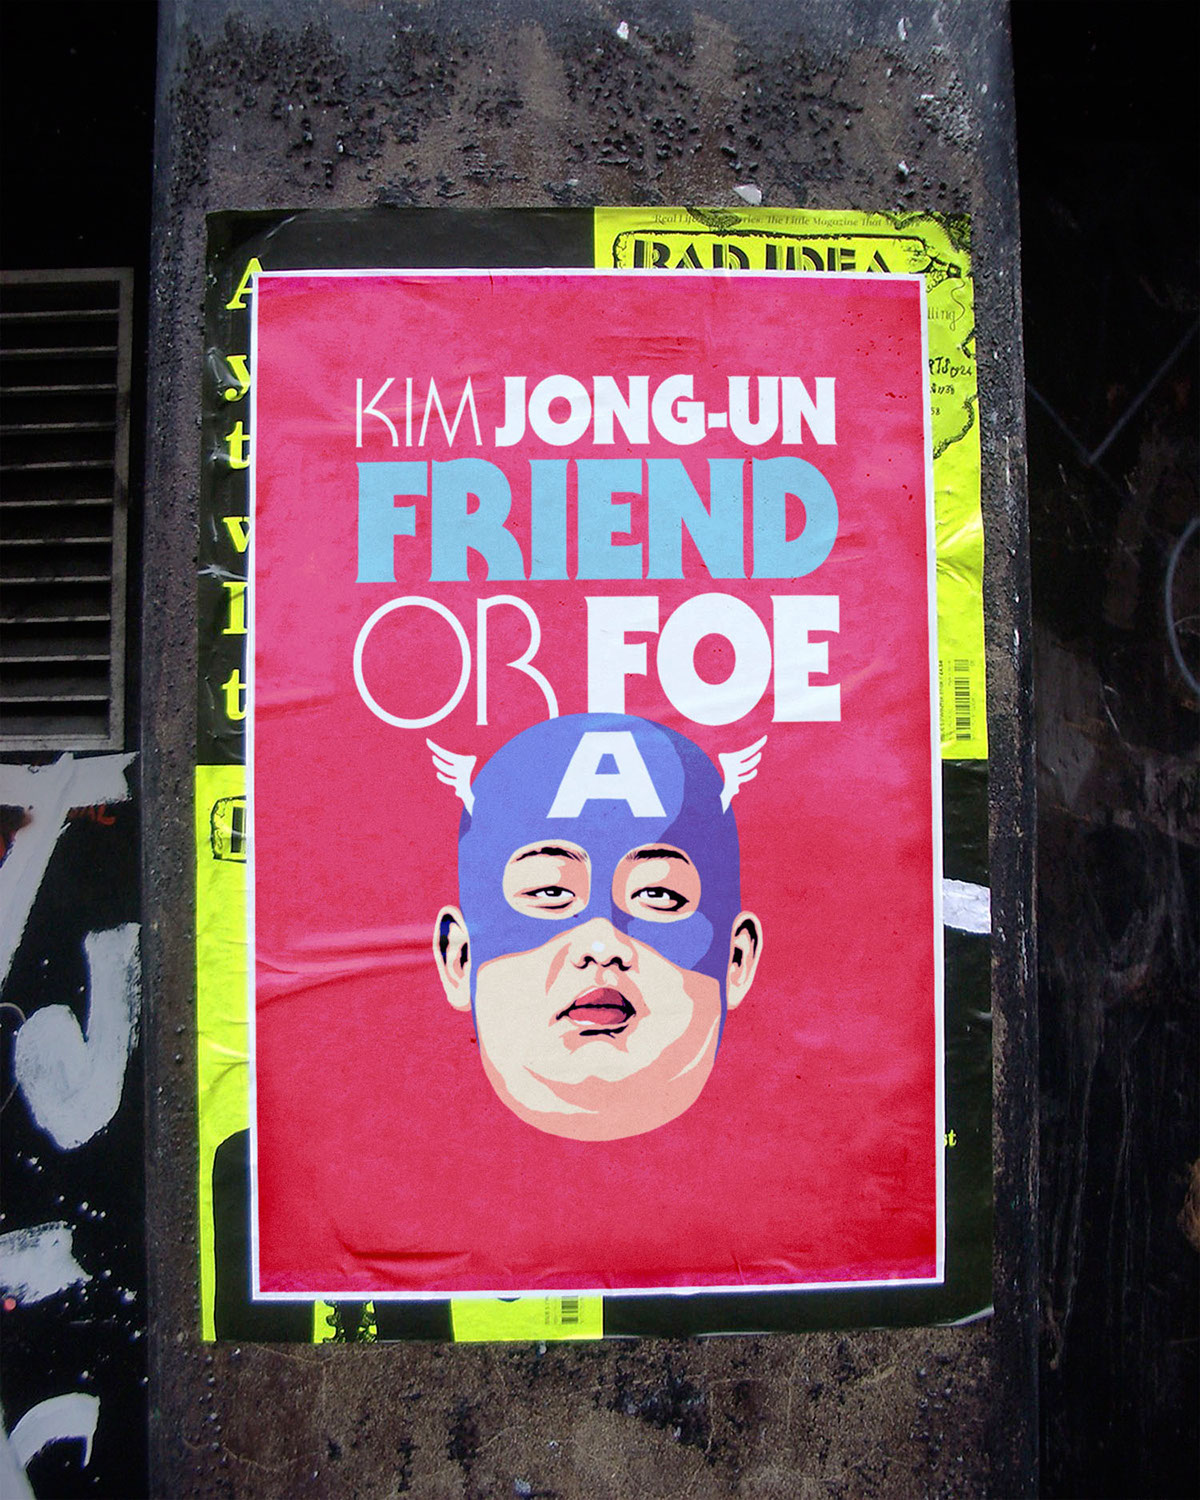 kim jong-un friend FOE pop culture north korea